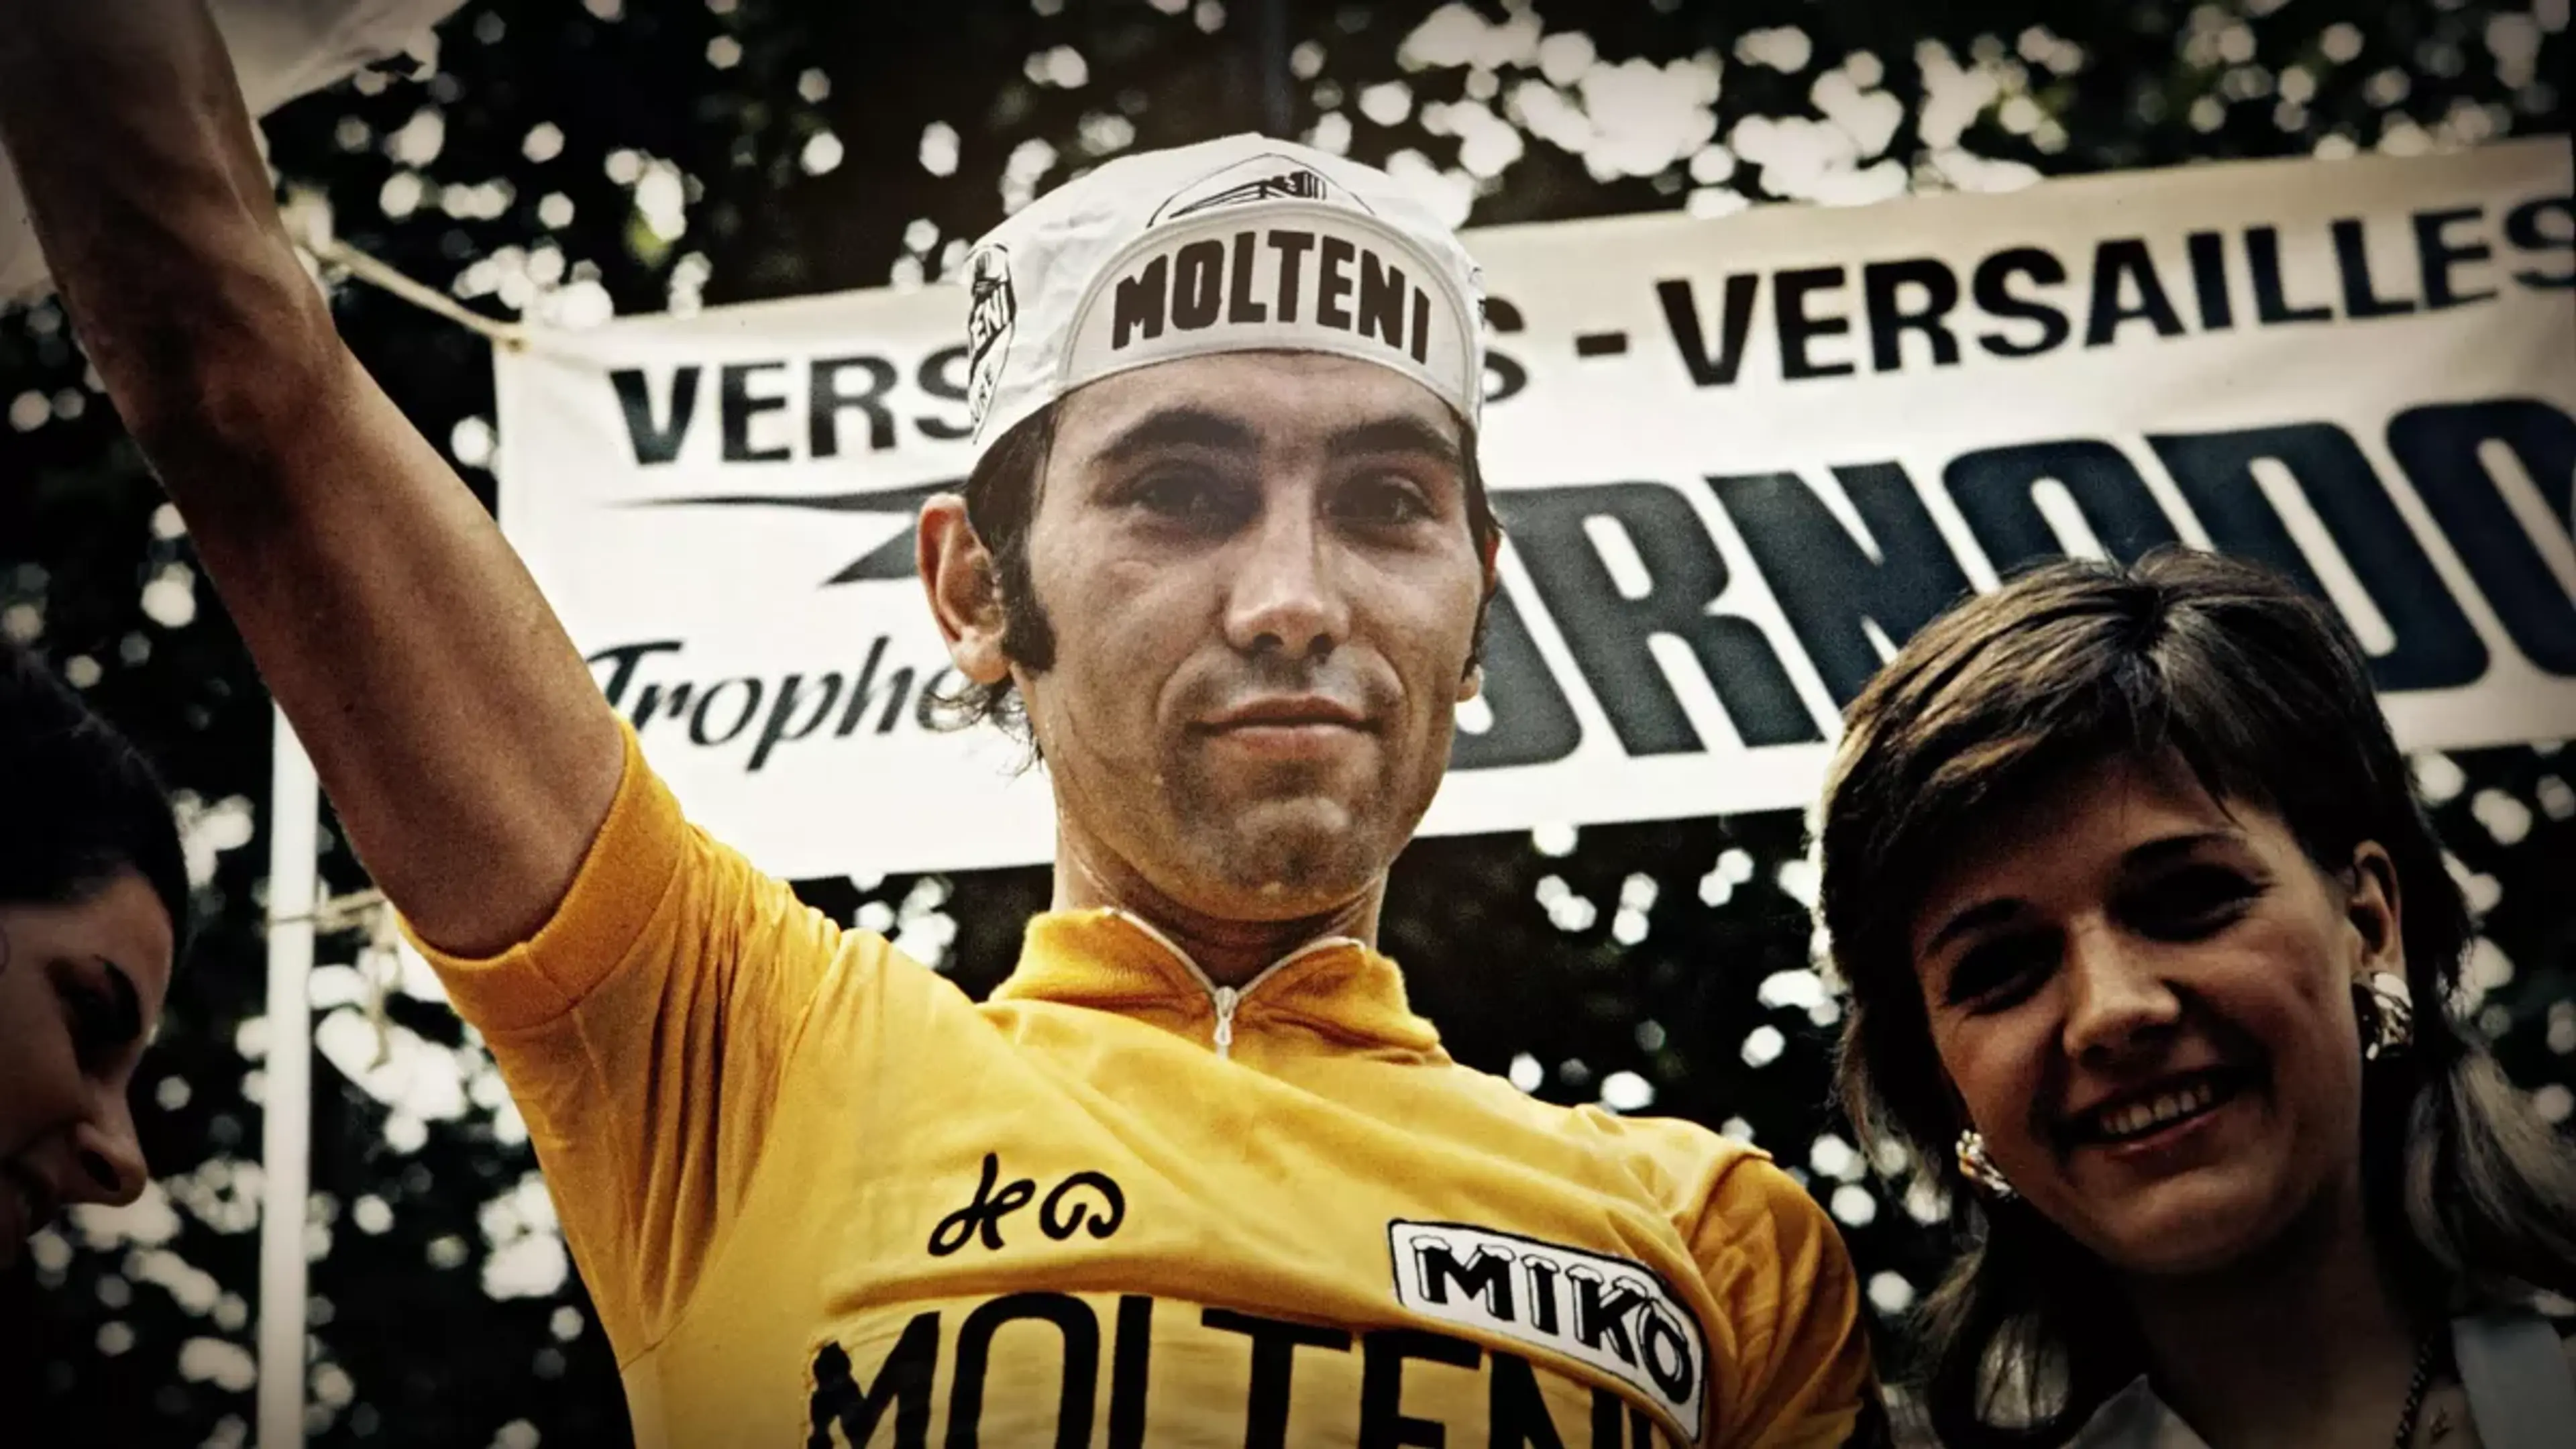 Eddy Merckx - Tour de France 1972